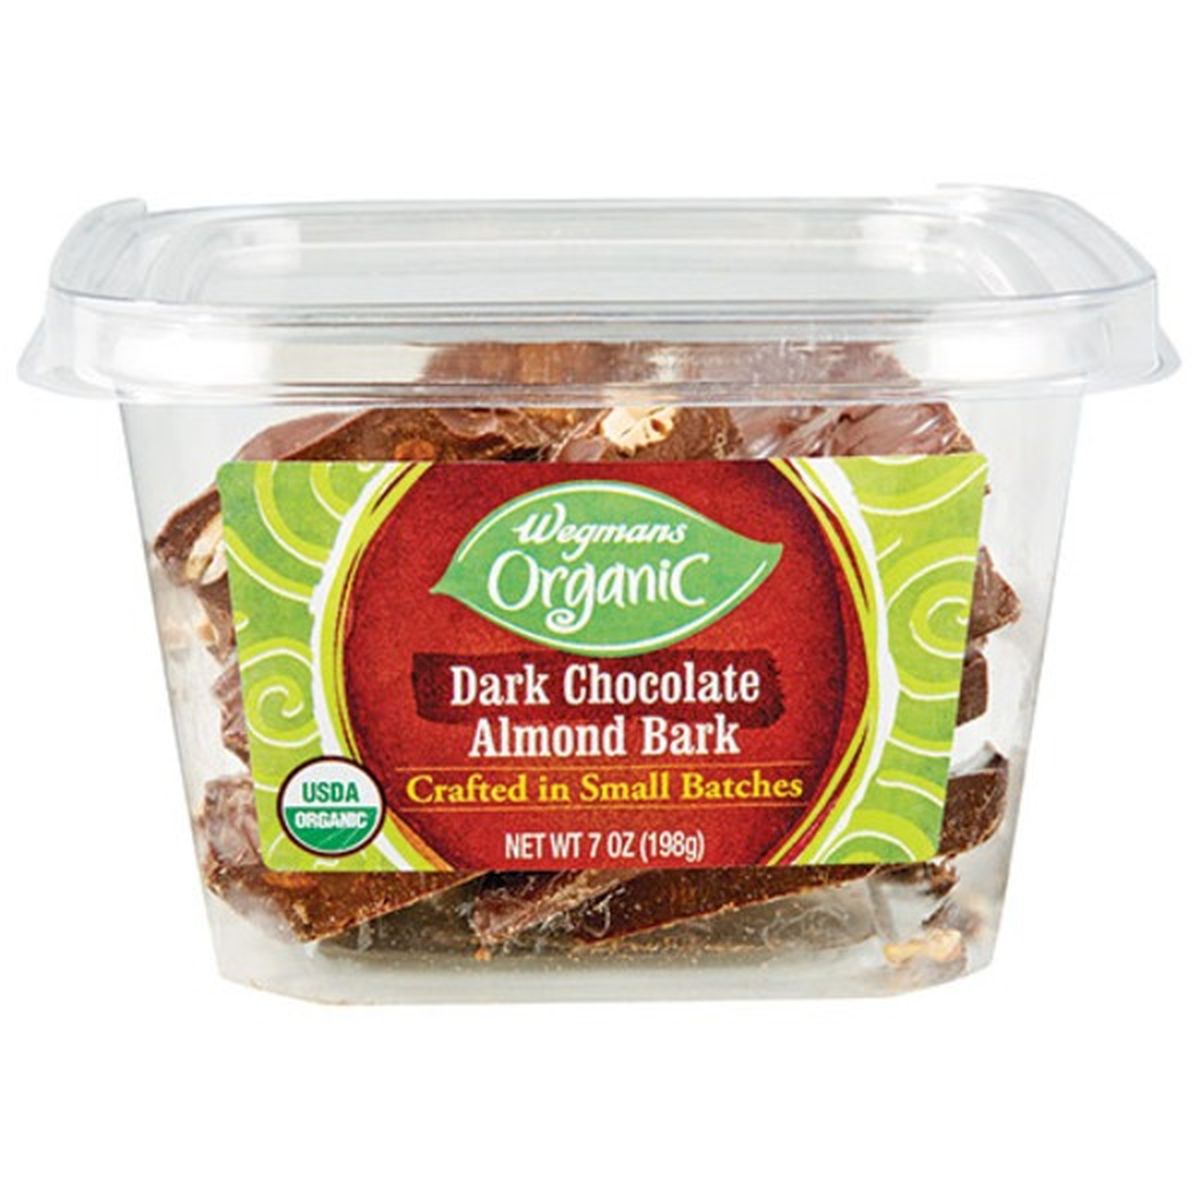 Calories in Wegmans Organic Dark Chocolate Almond Bark